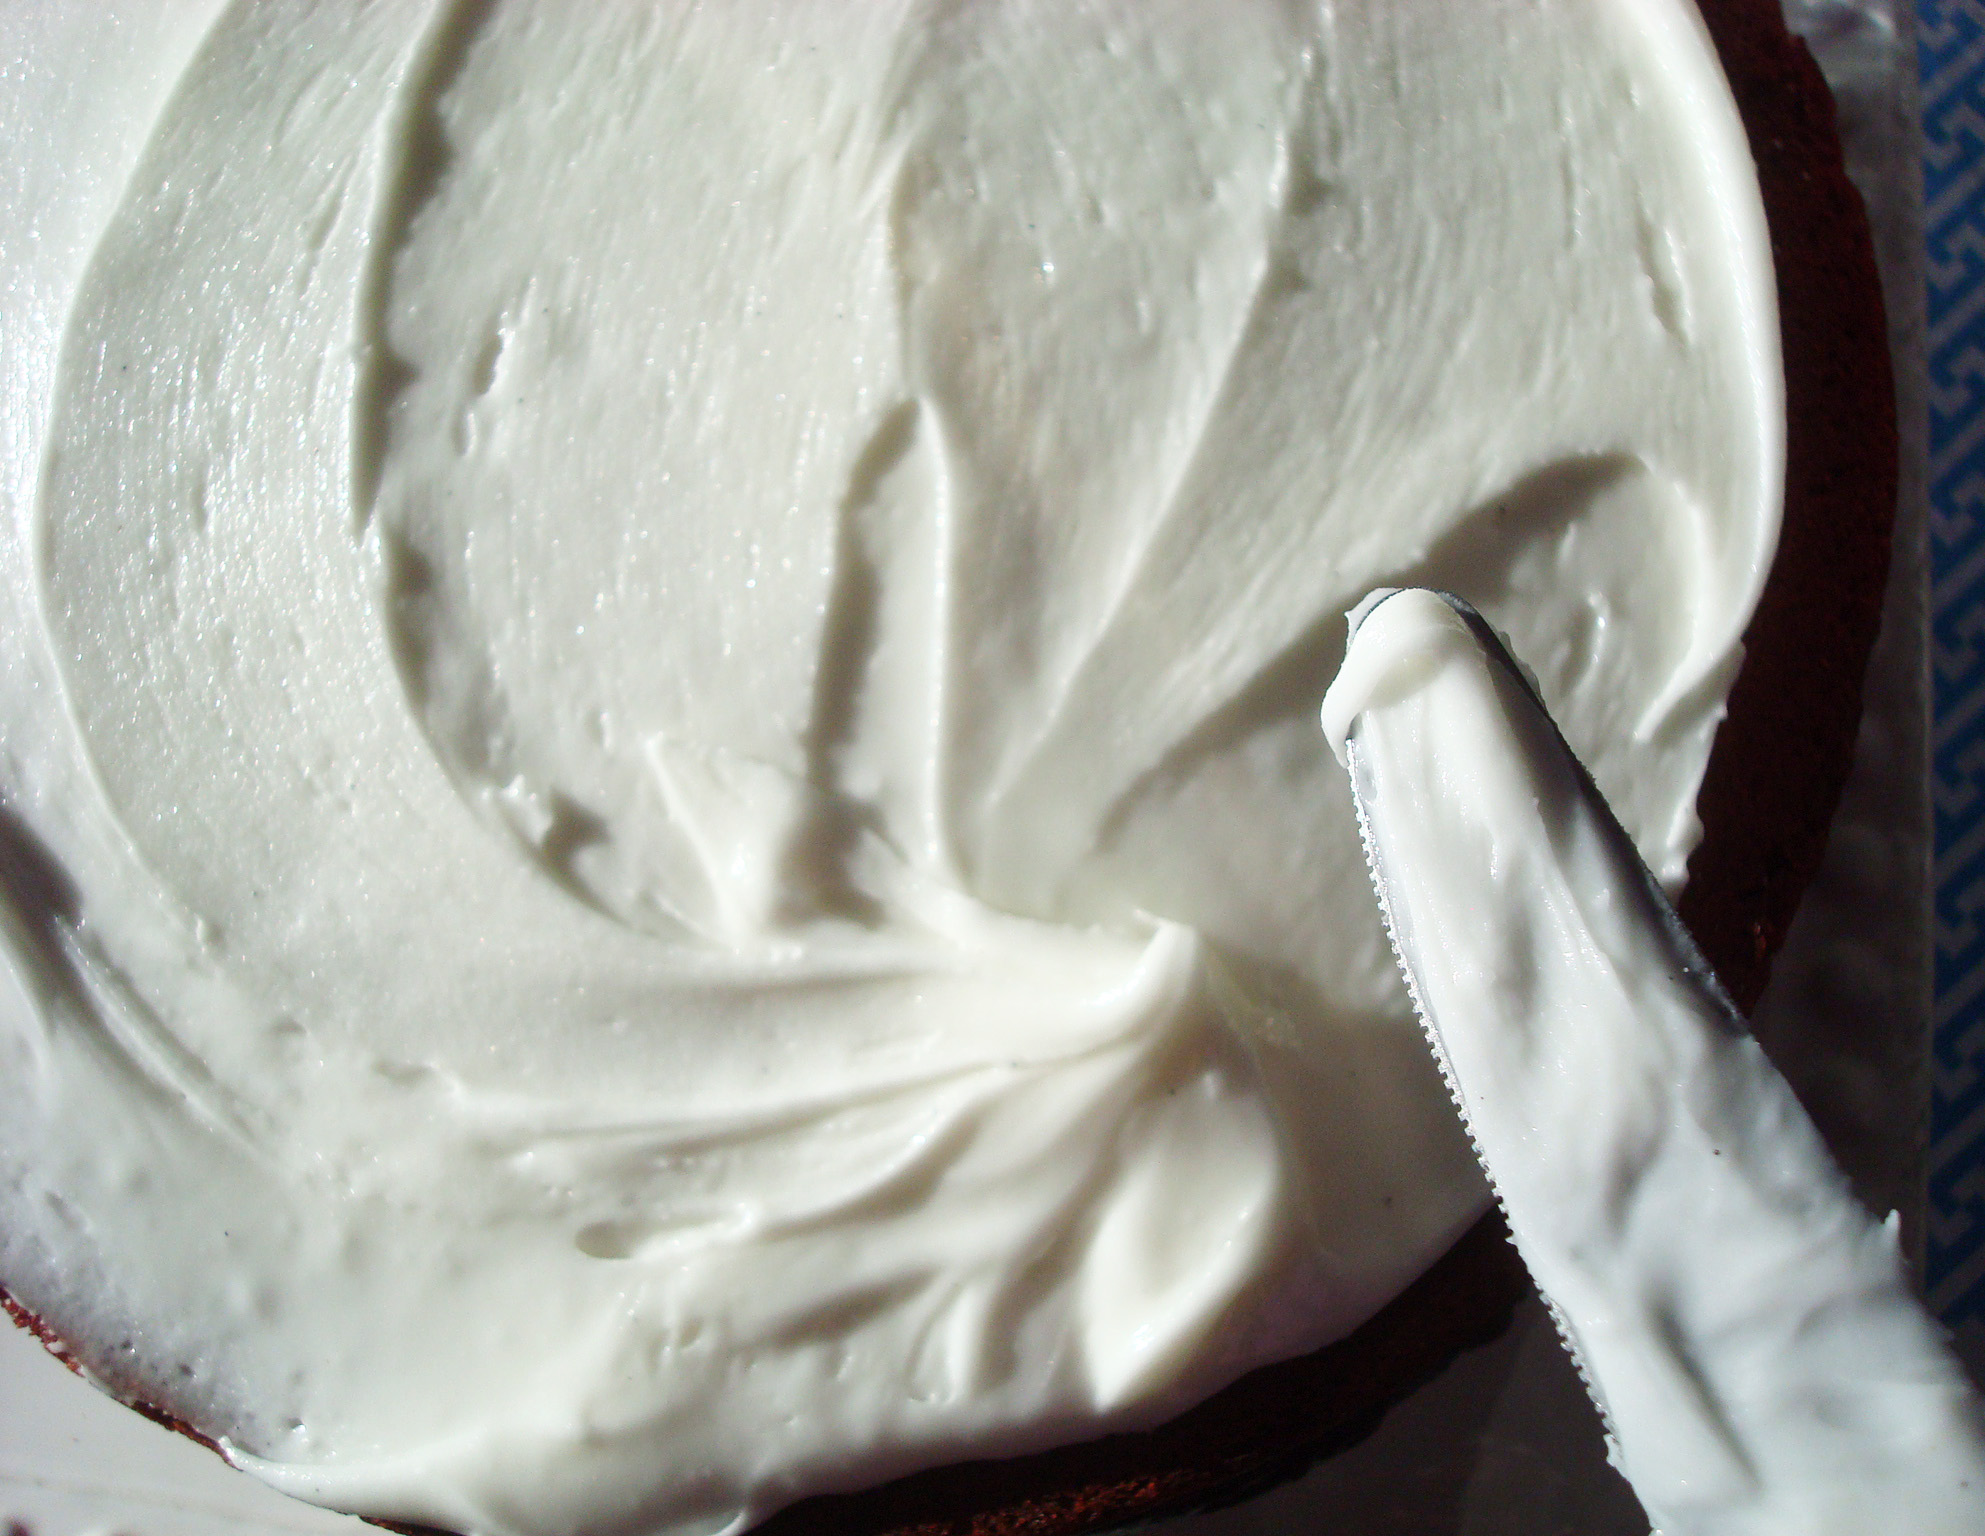 Working with greek yogurt icing